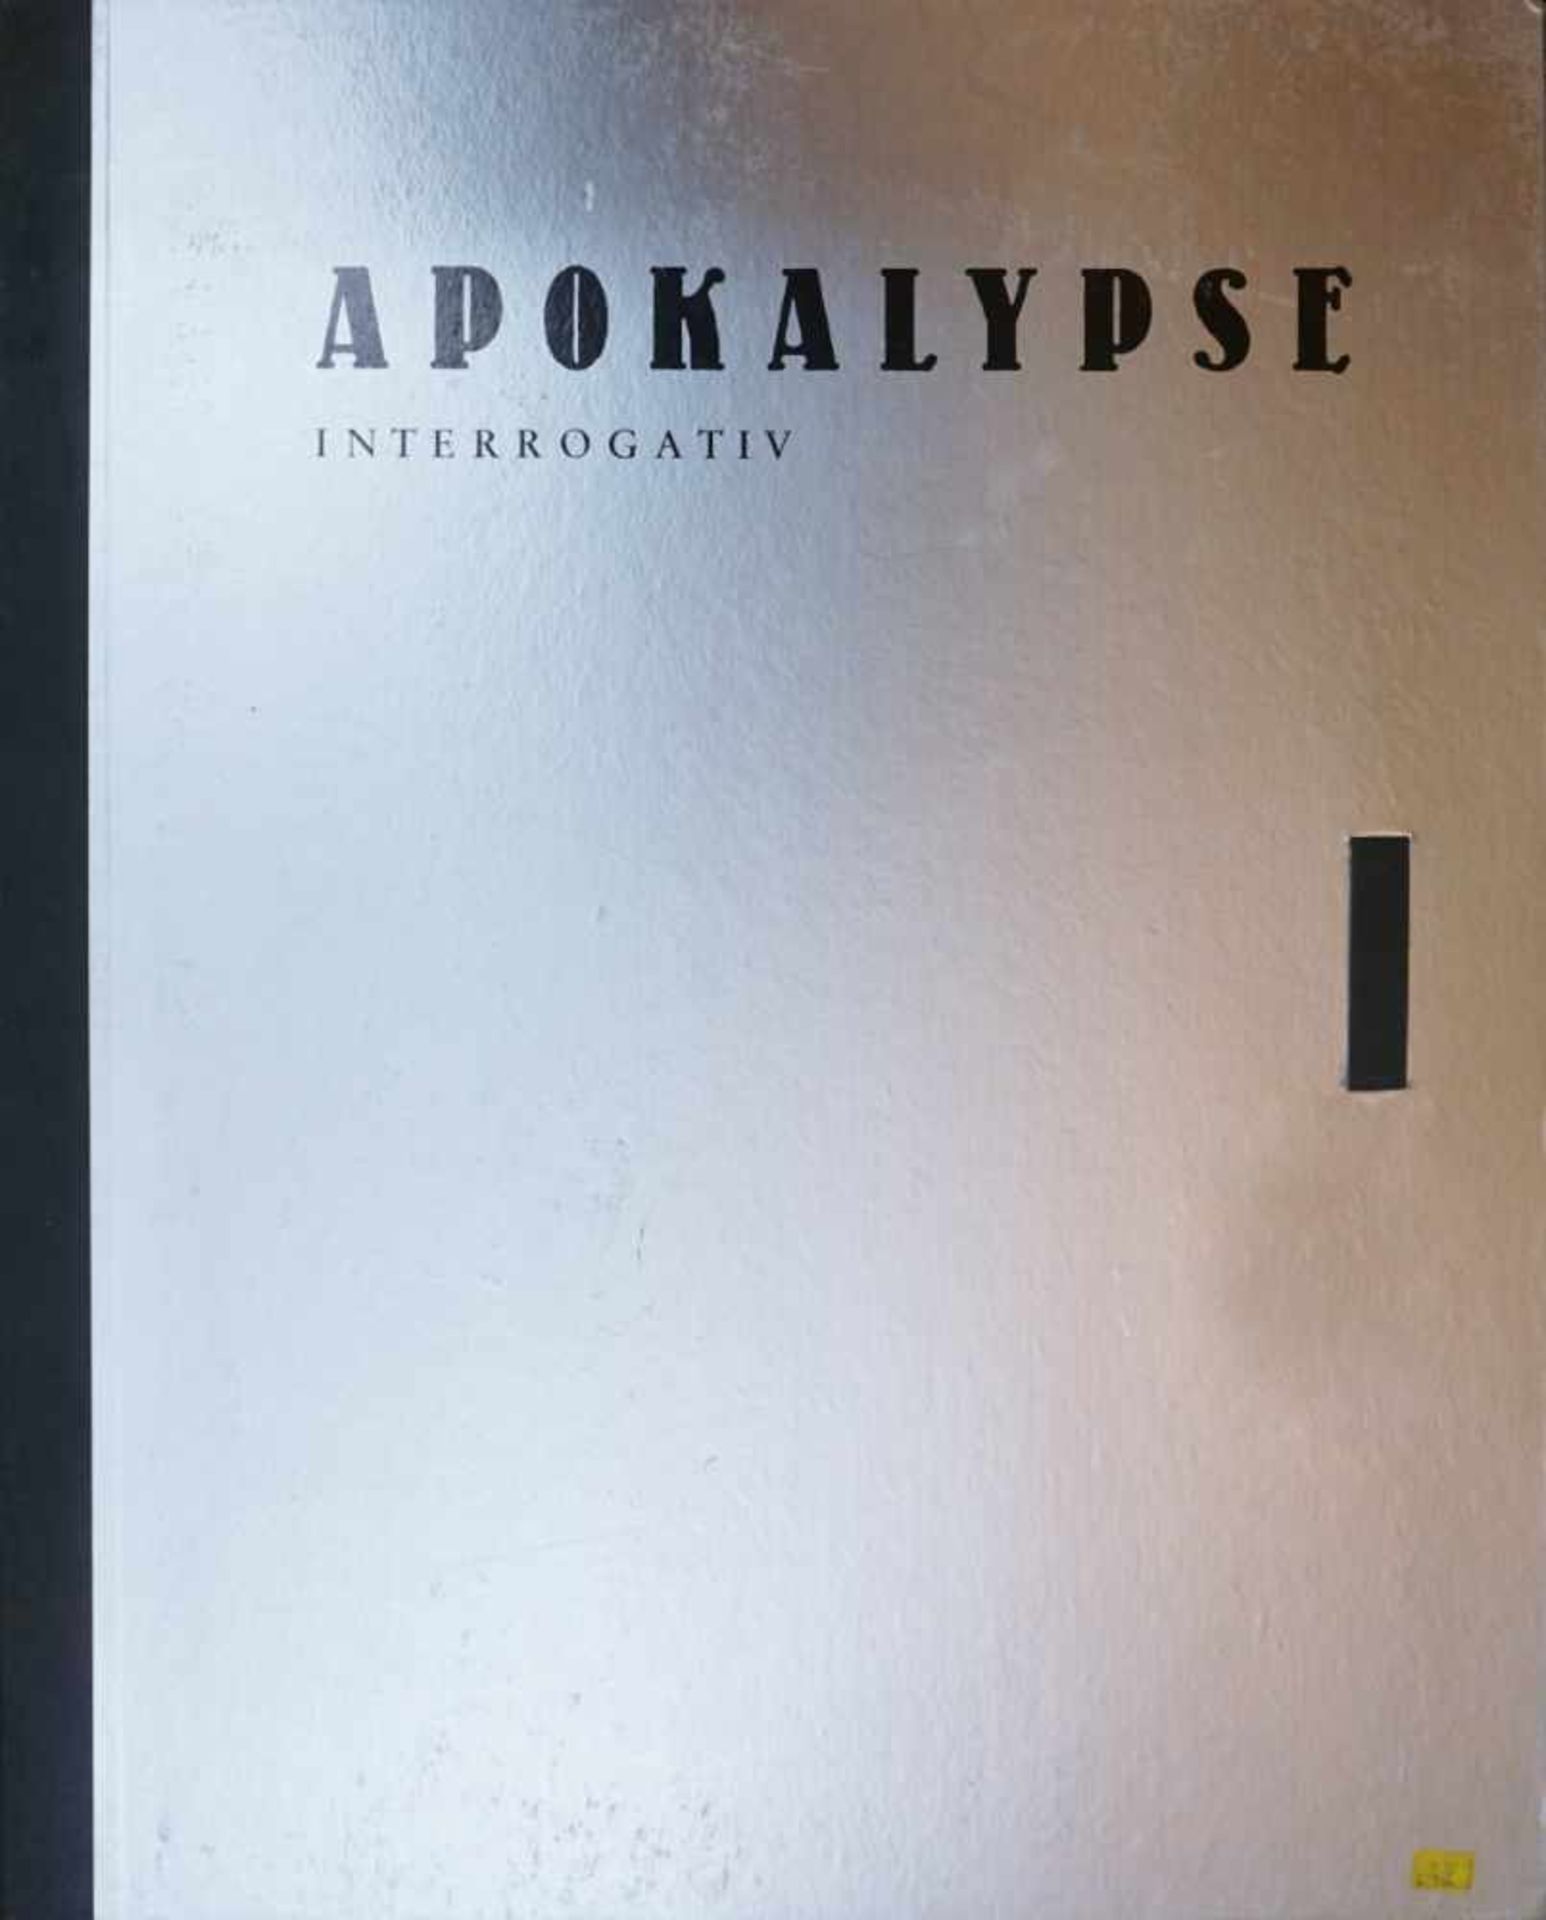 1 Grafikmappe "Apokalypse Interrogativ" m. 8 Holzschnitten v. Pitt CUERLIS und Texten v. Ernst F